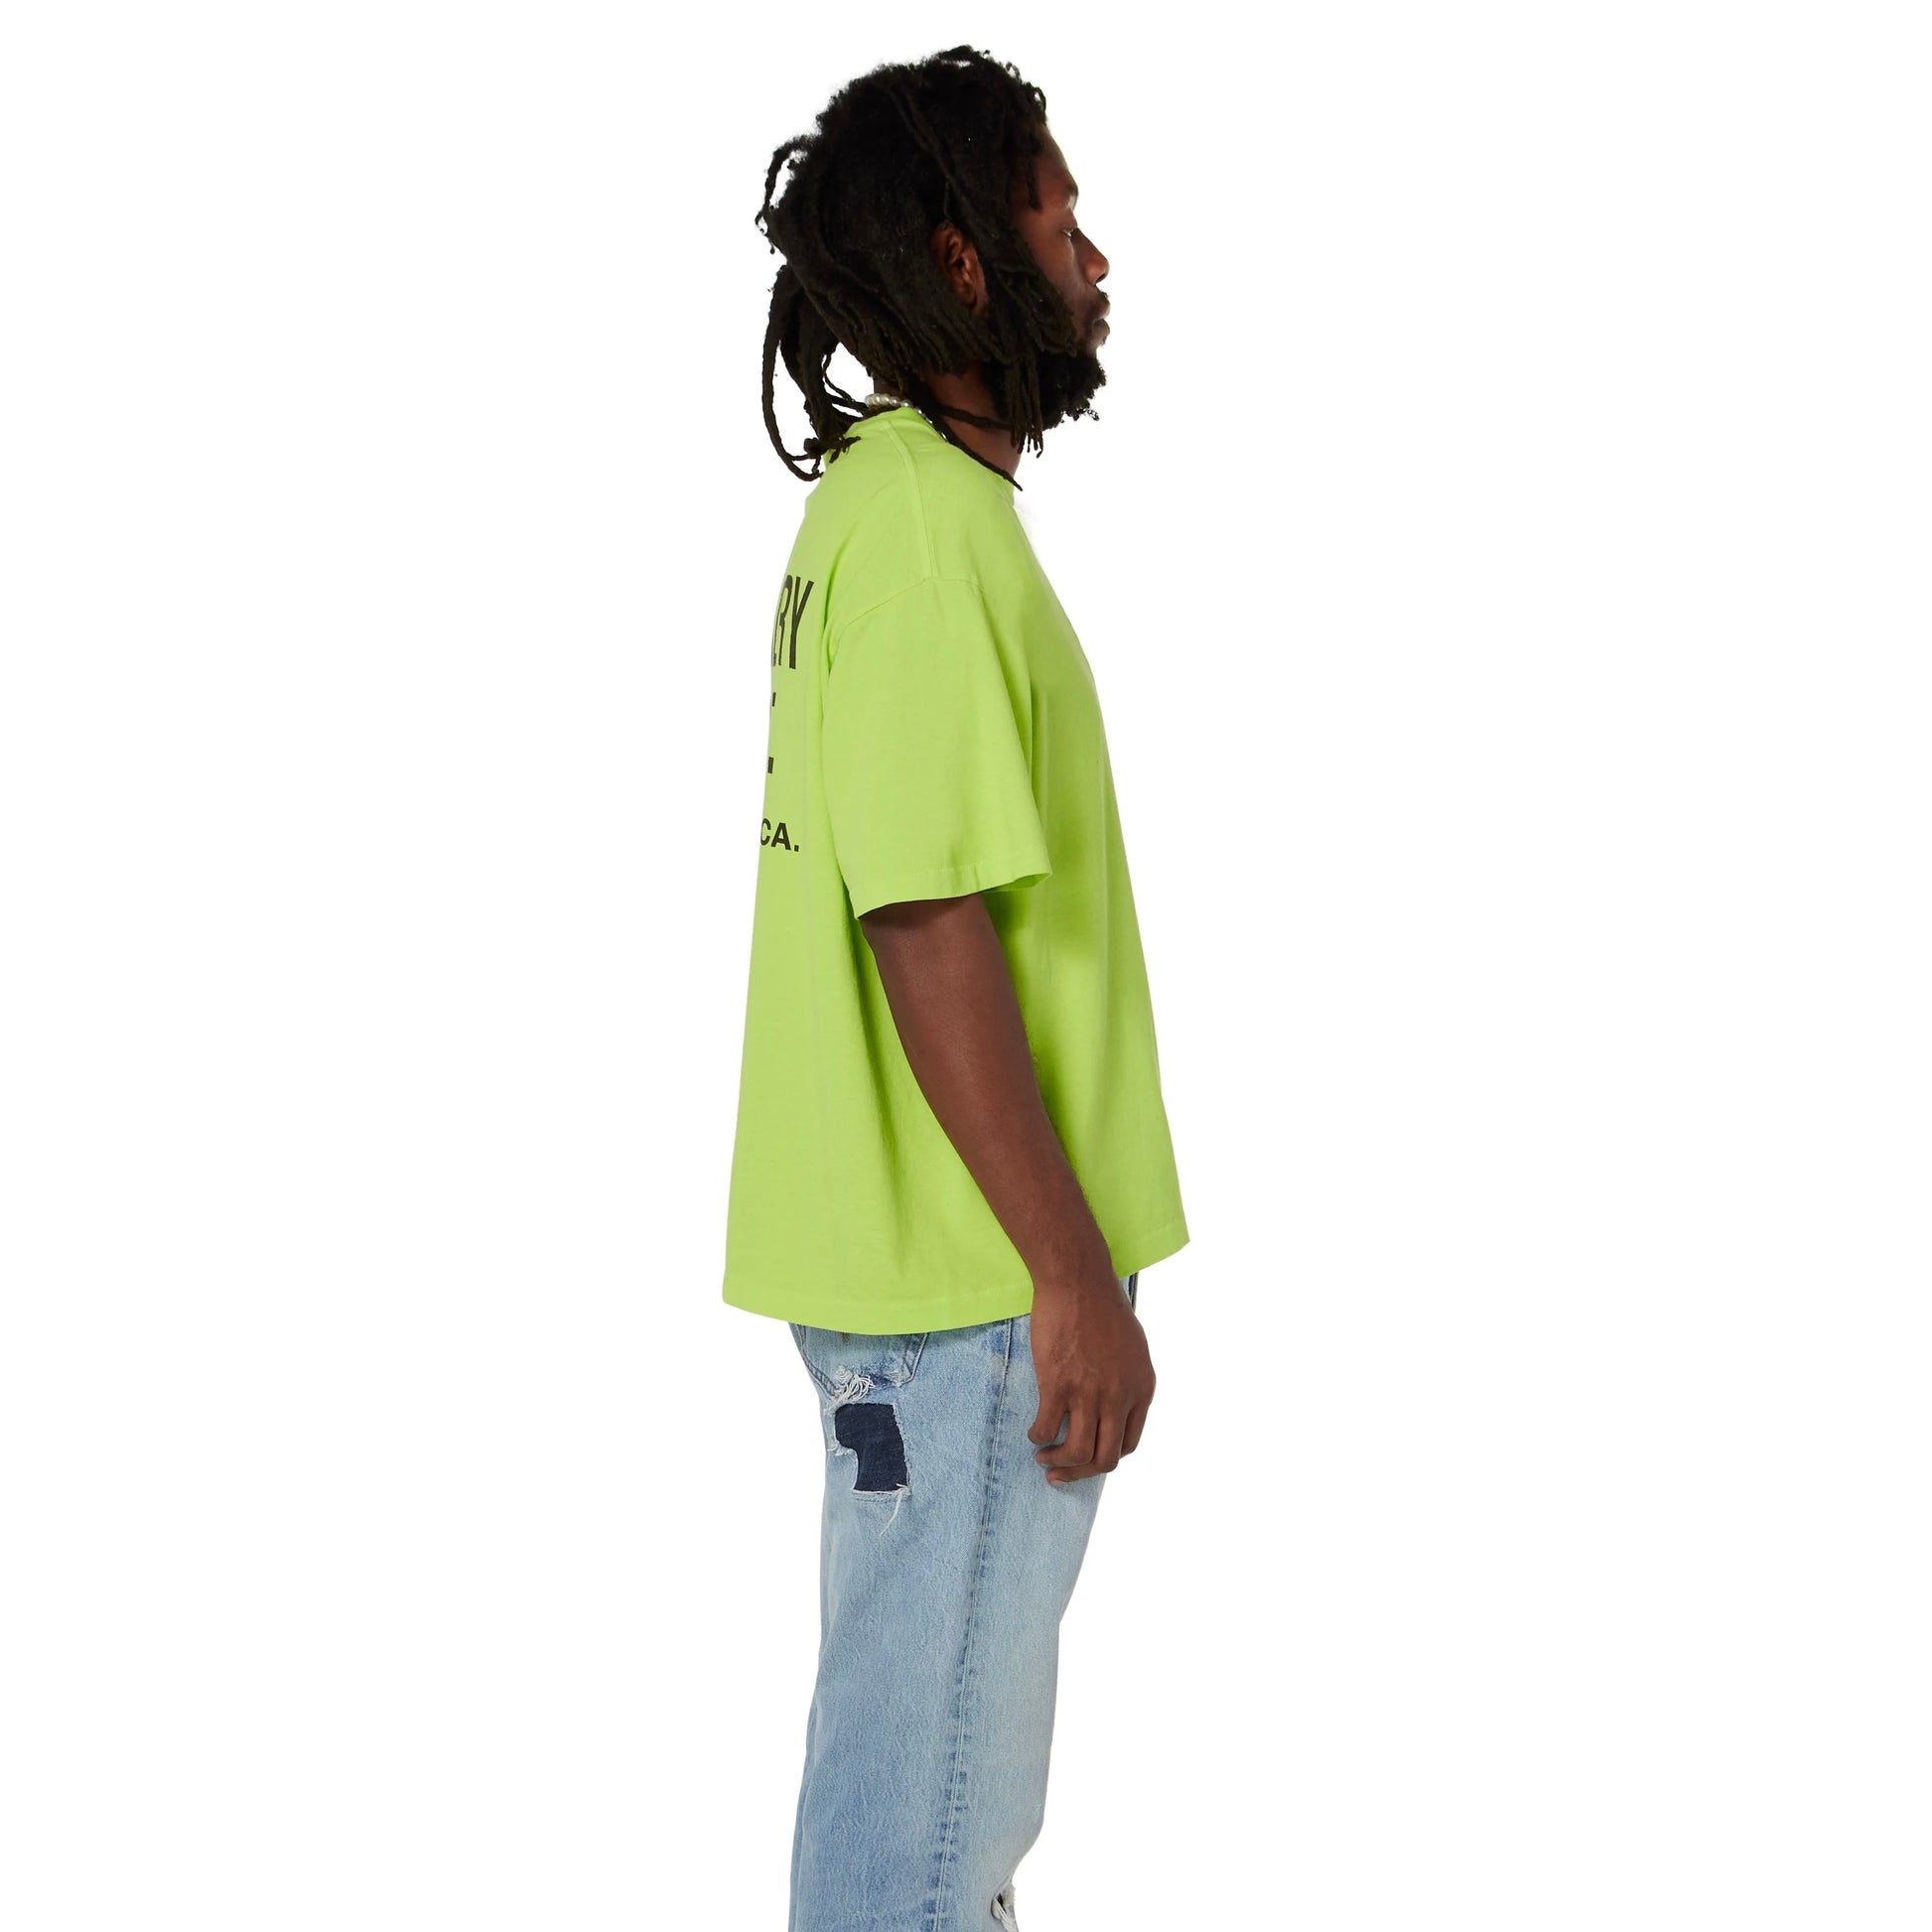 Gallery Dept Lime Green Souvenir T-Shirt On Body View 7